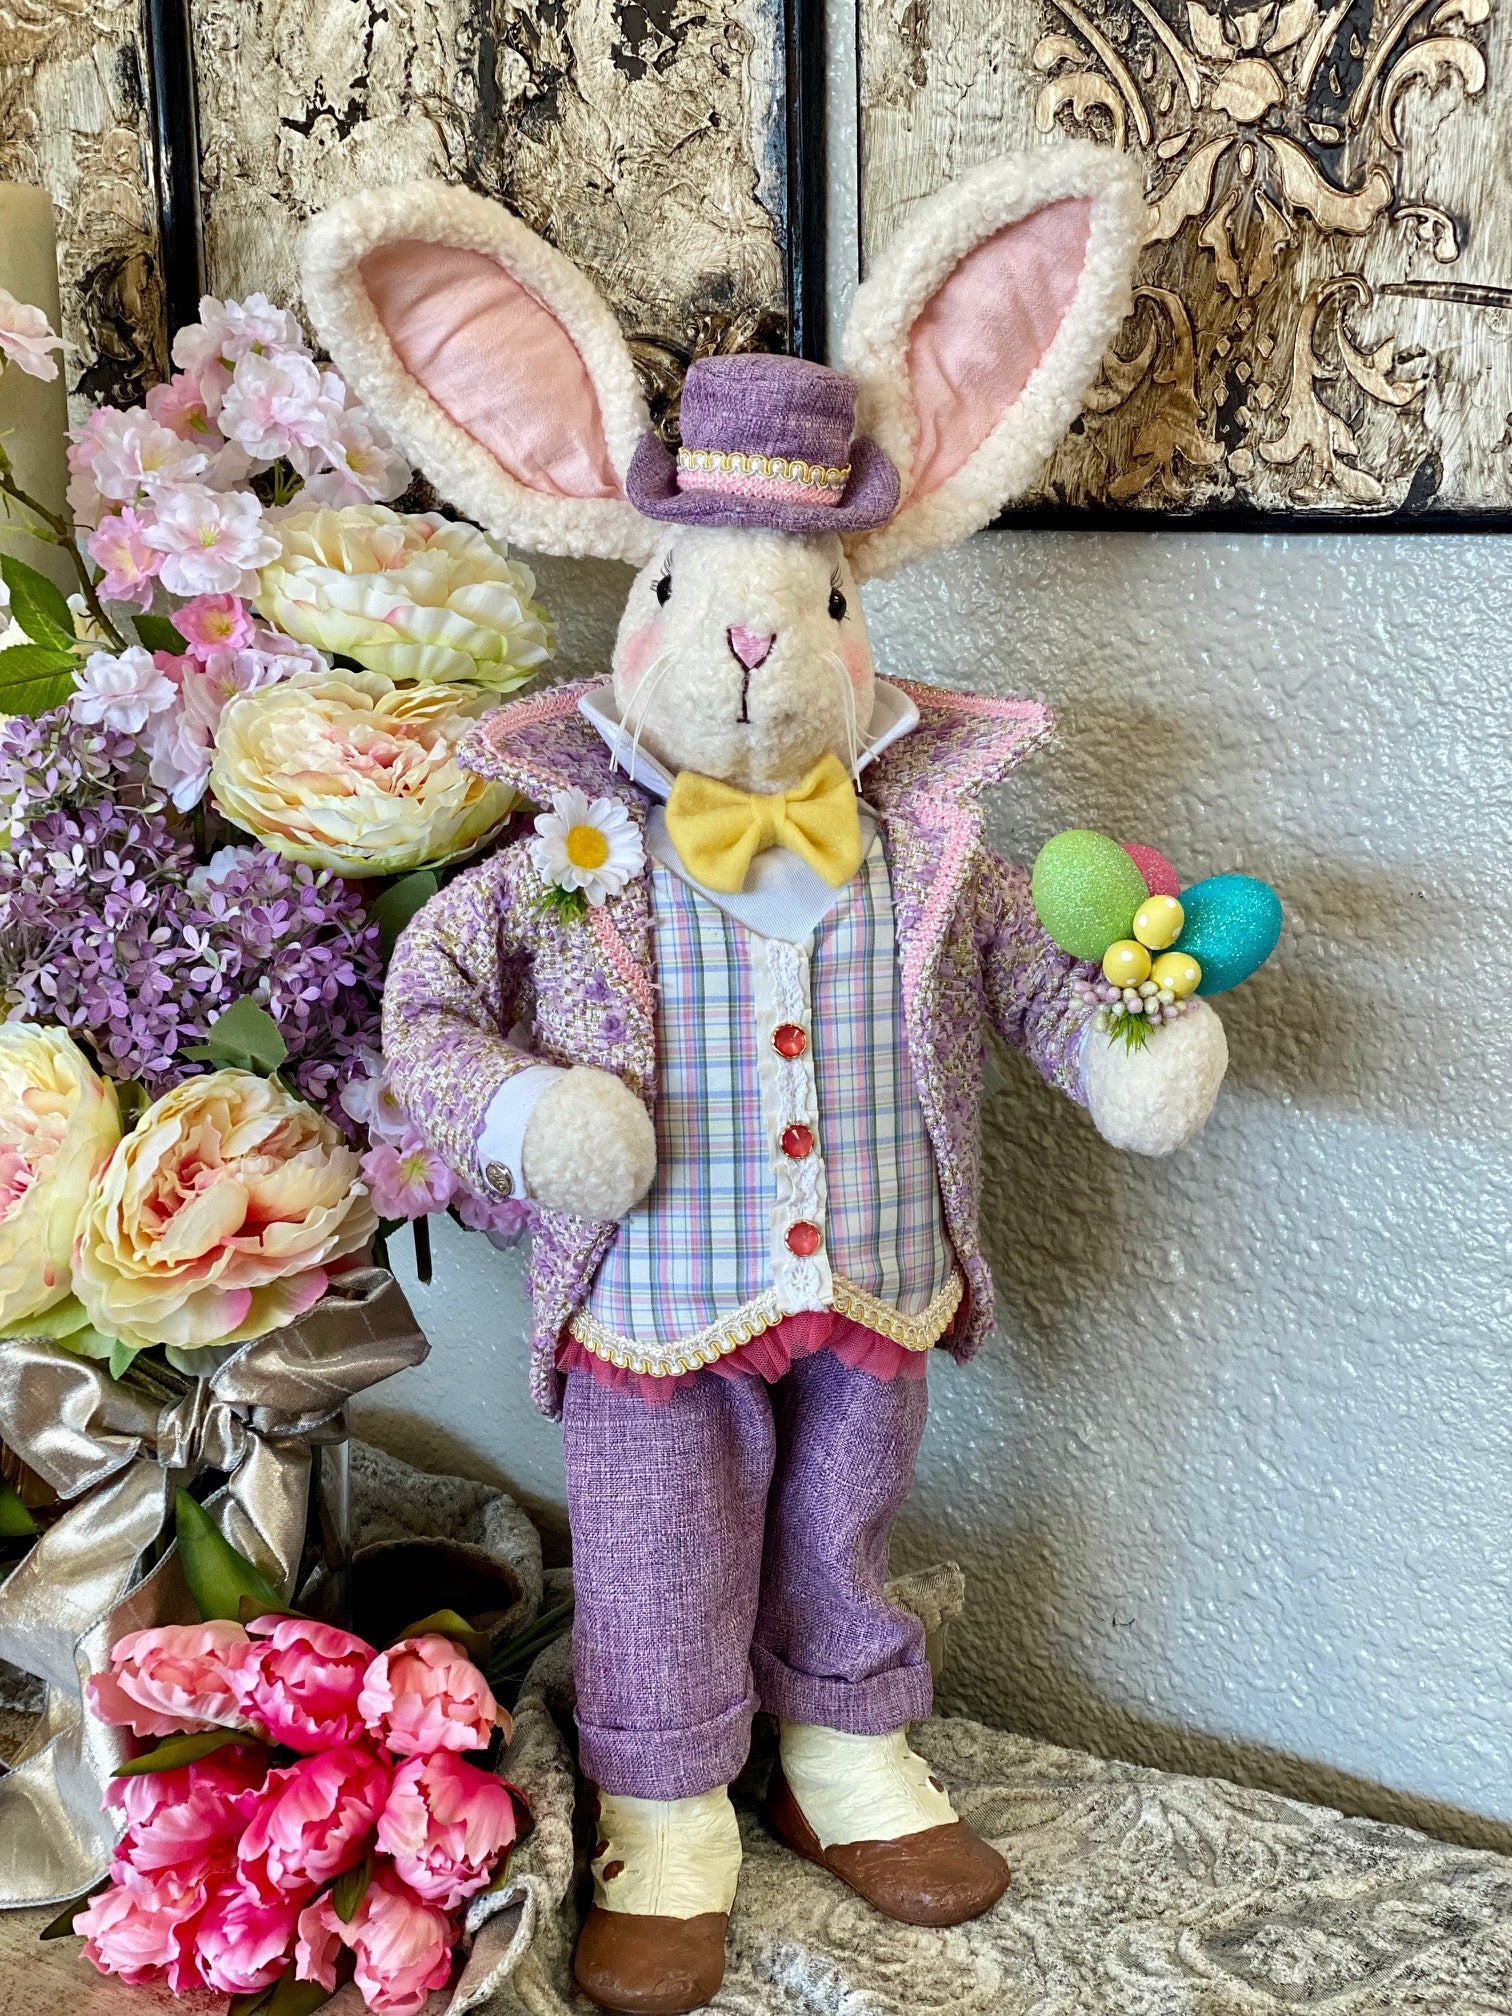 Mr. Purple Bunny